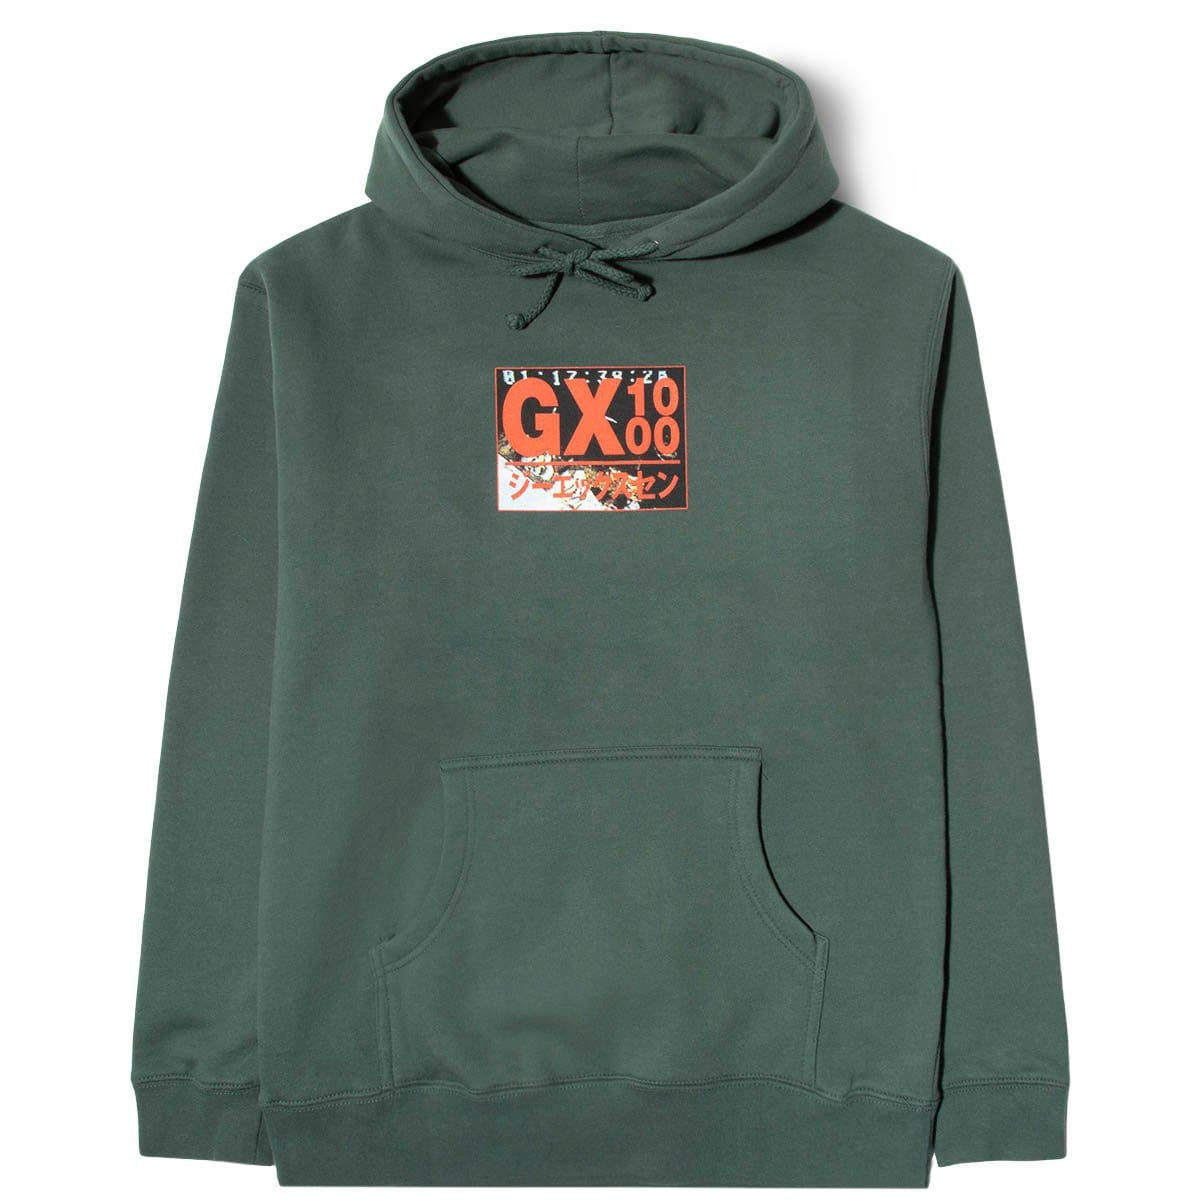 GX1000 Hoodies & Sweatshirts HORROR HOOD